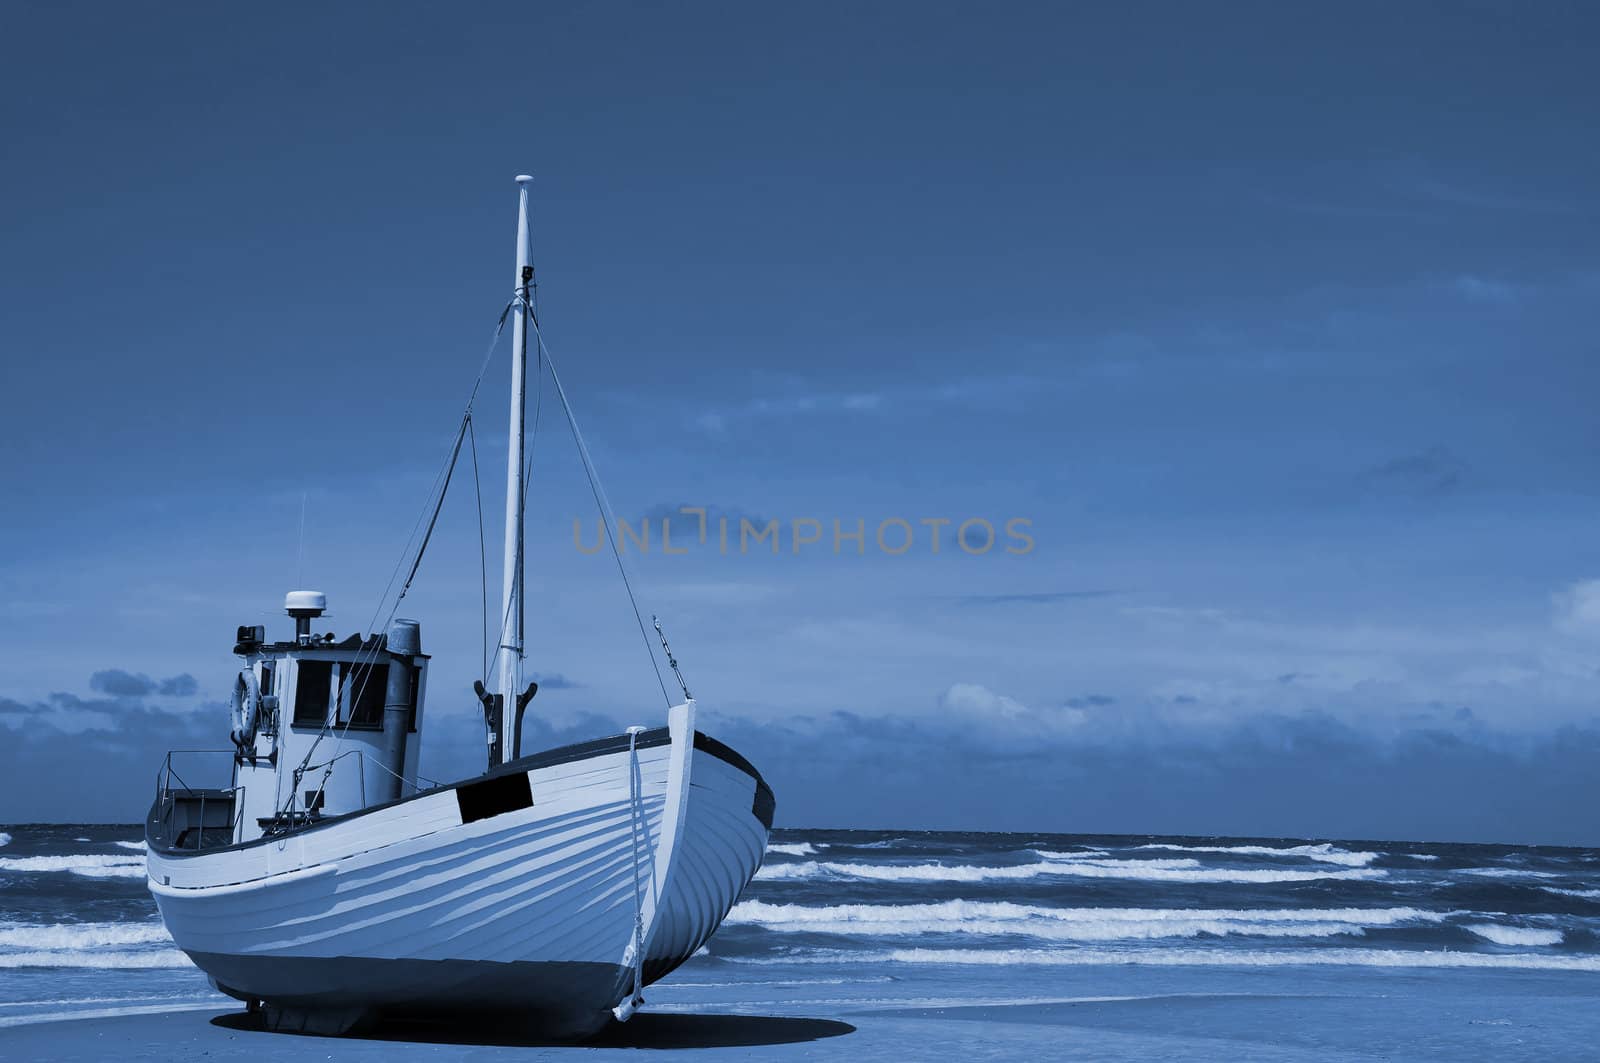 A fishingboat is lying on a sandy beach